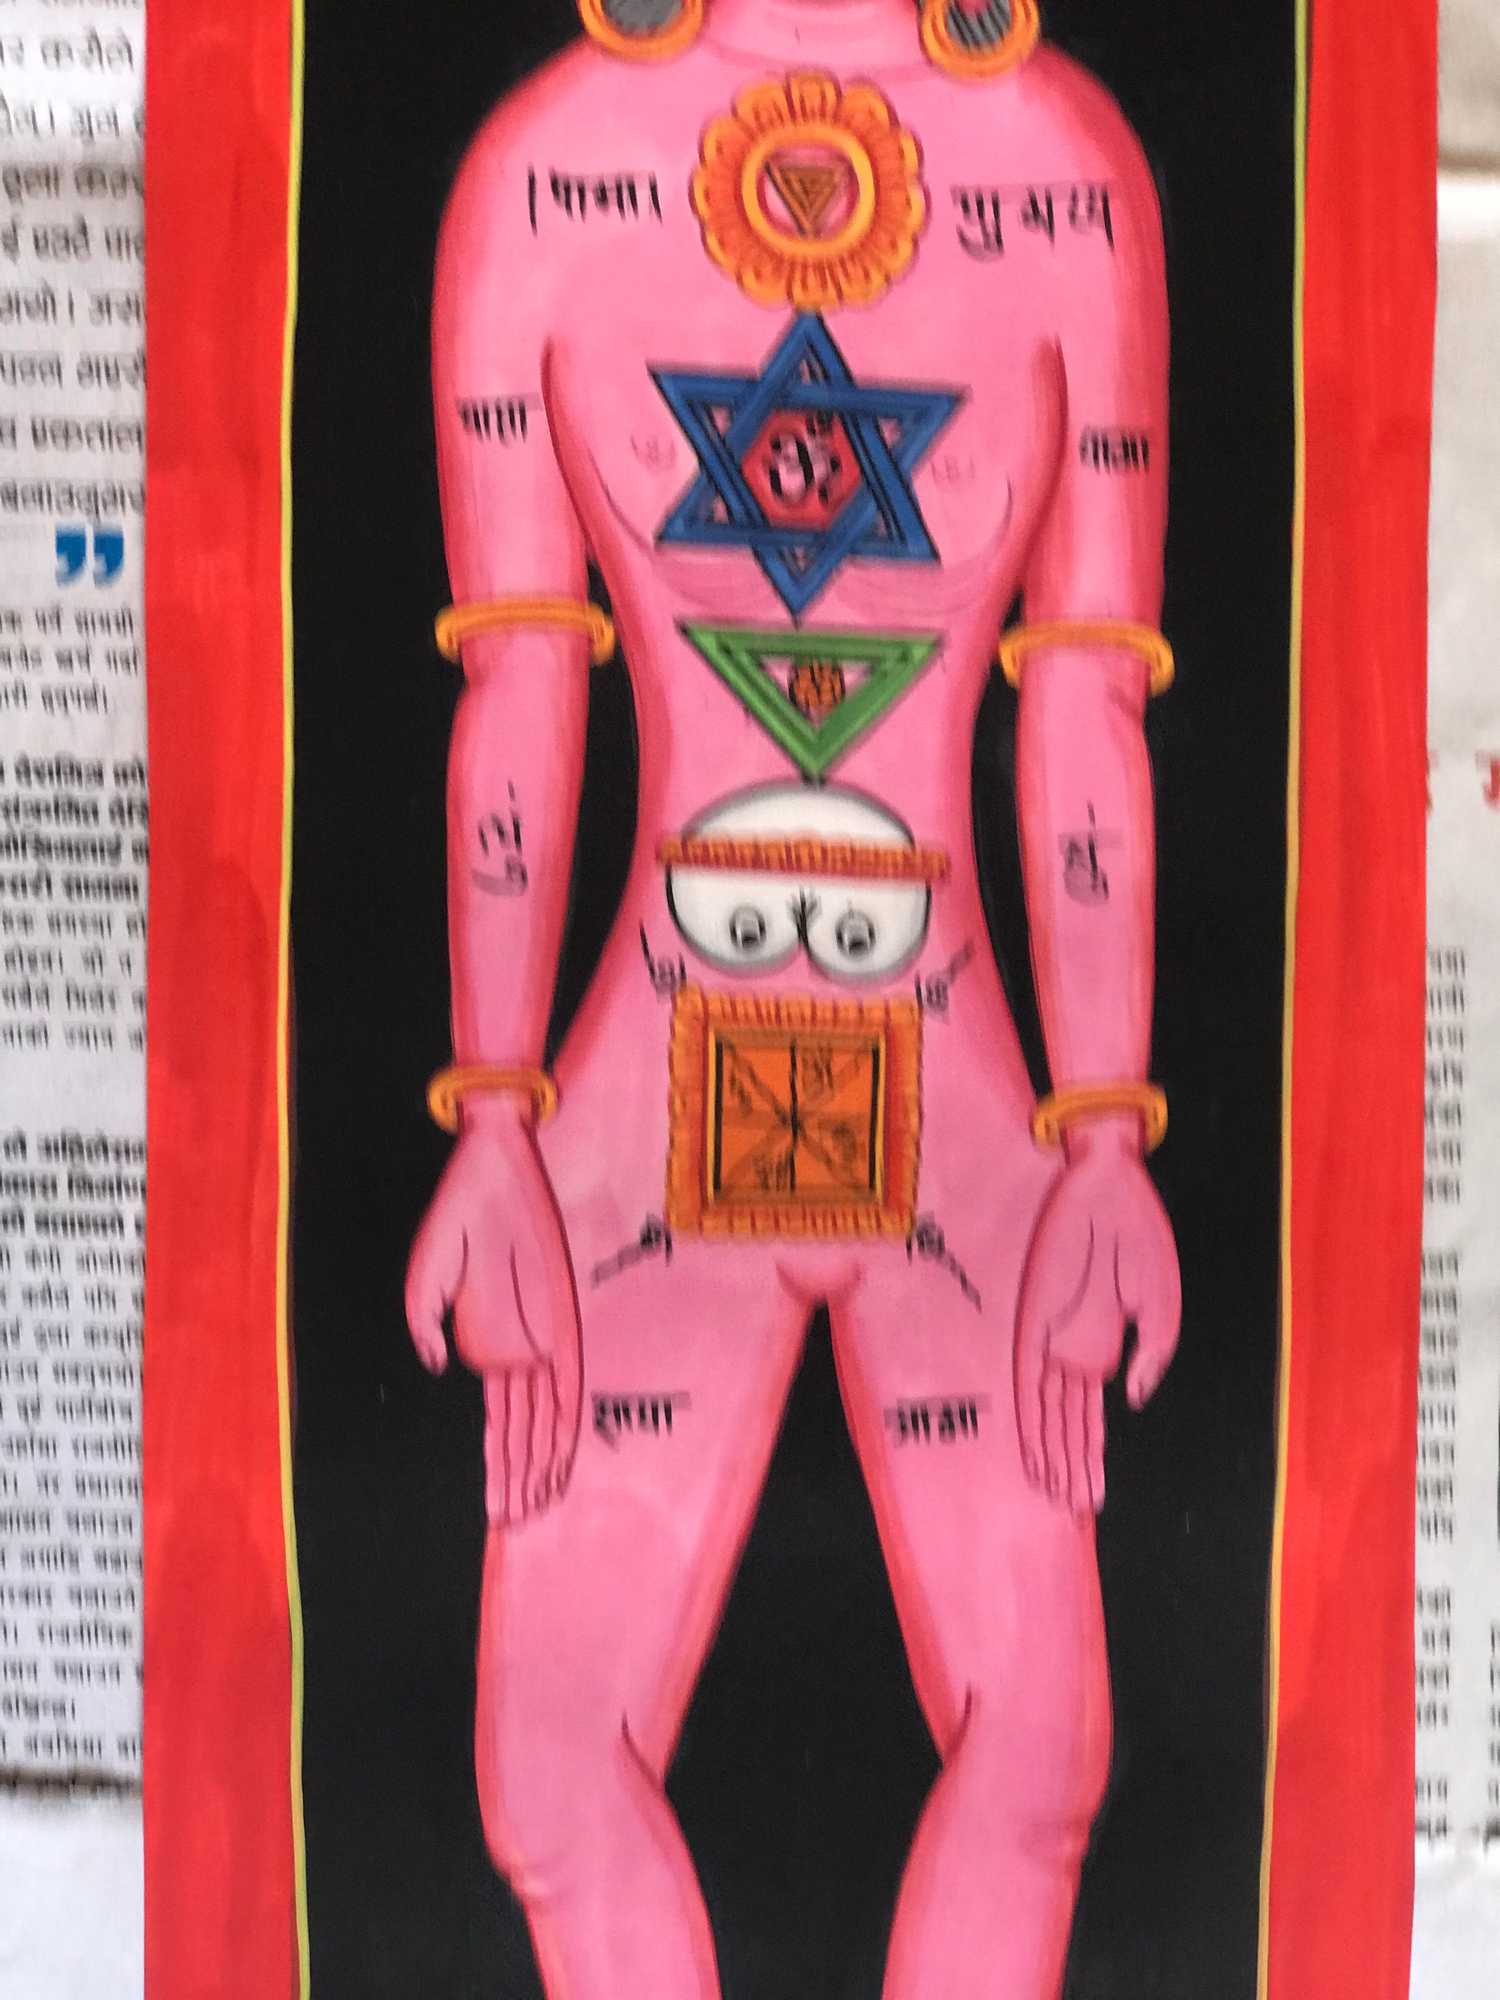 Tibetan Samadhi Thangka, seven Chakra, pink